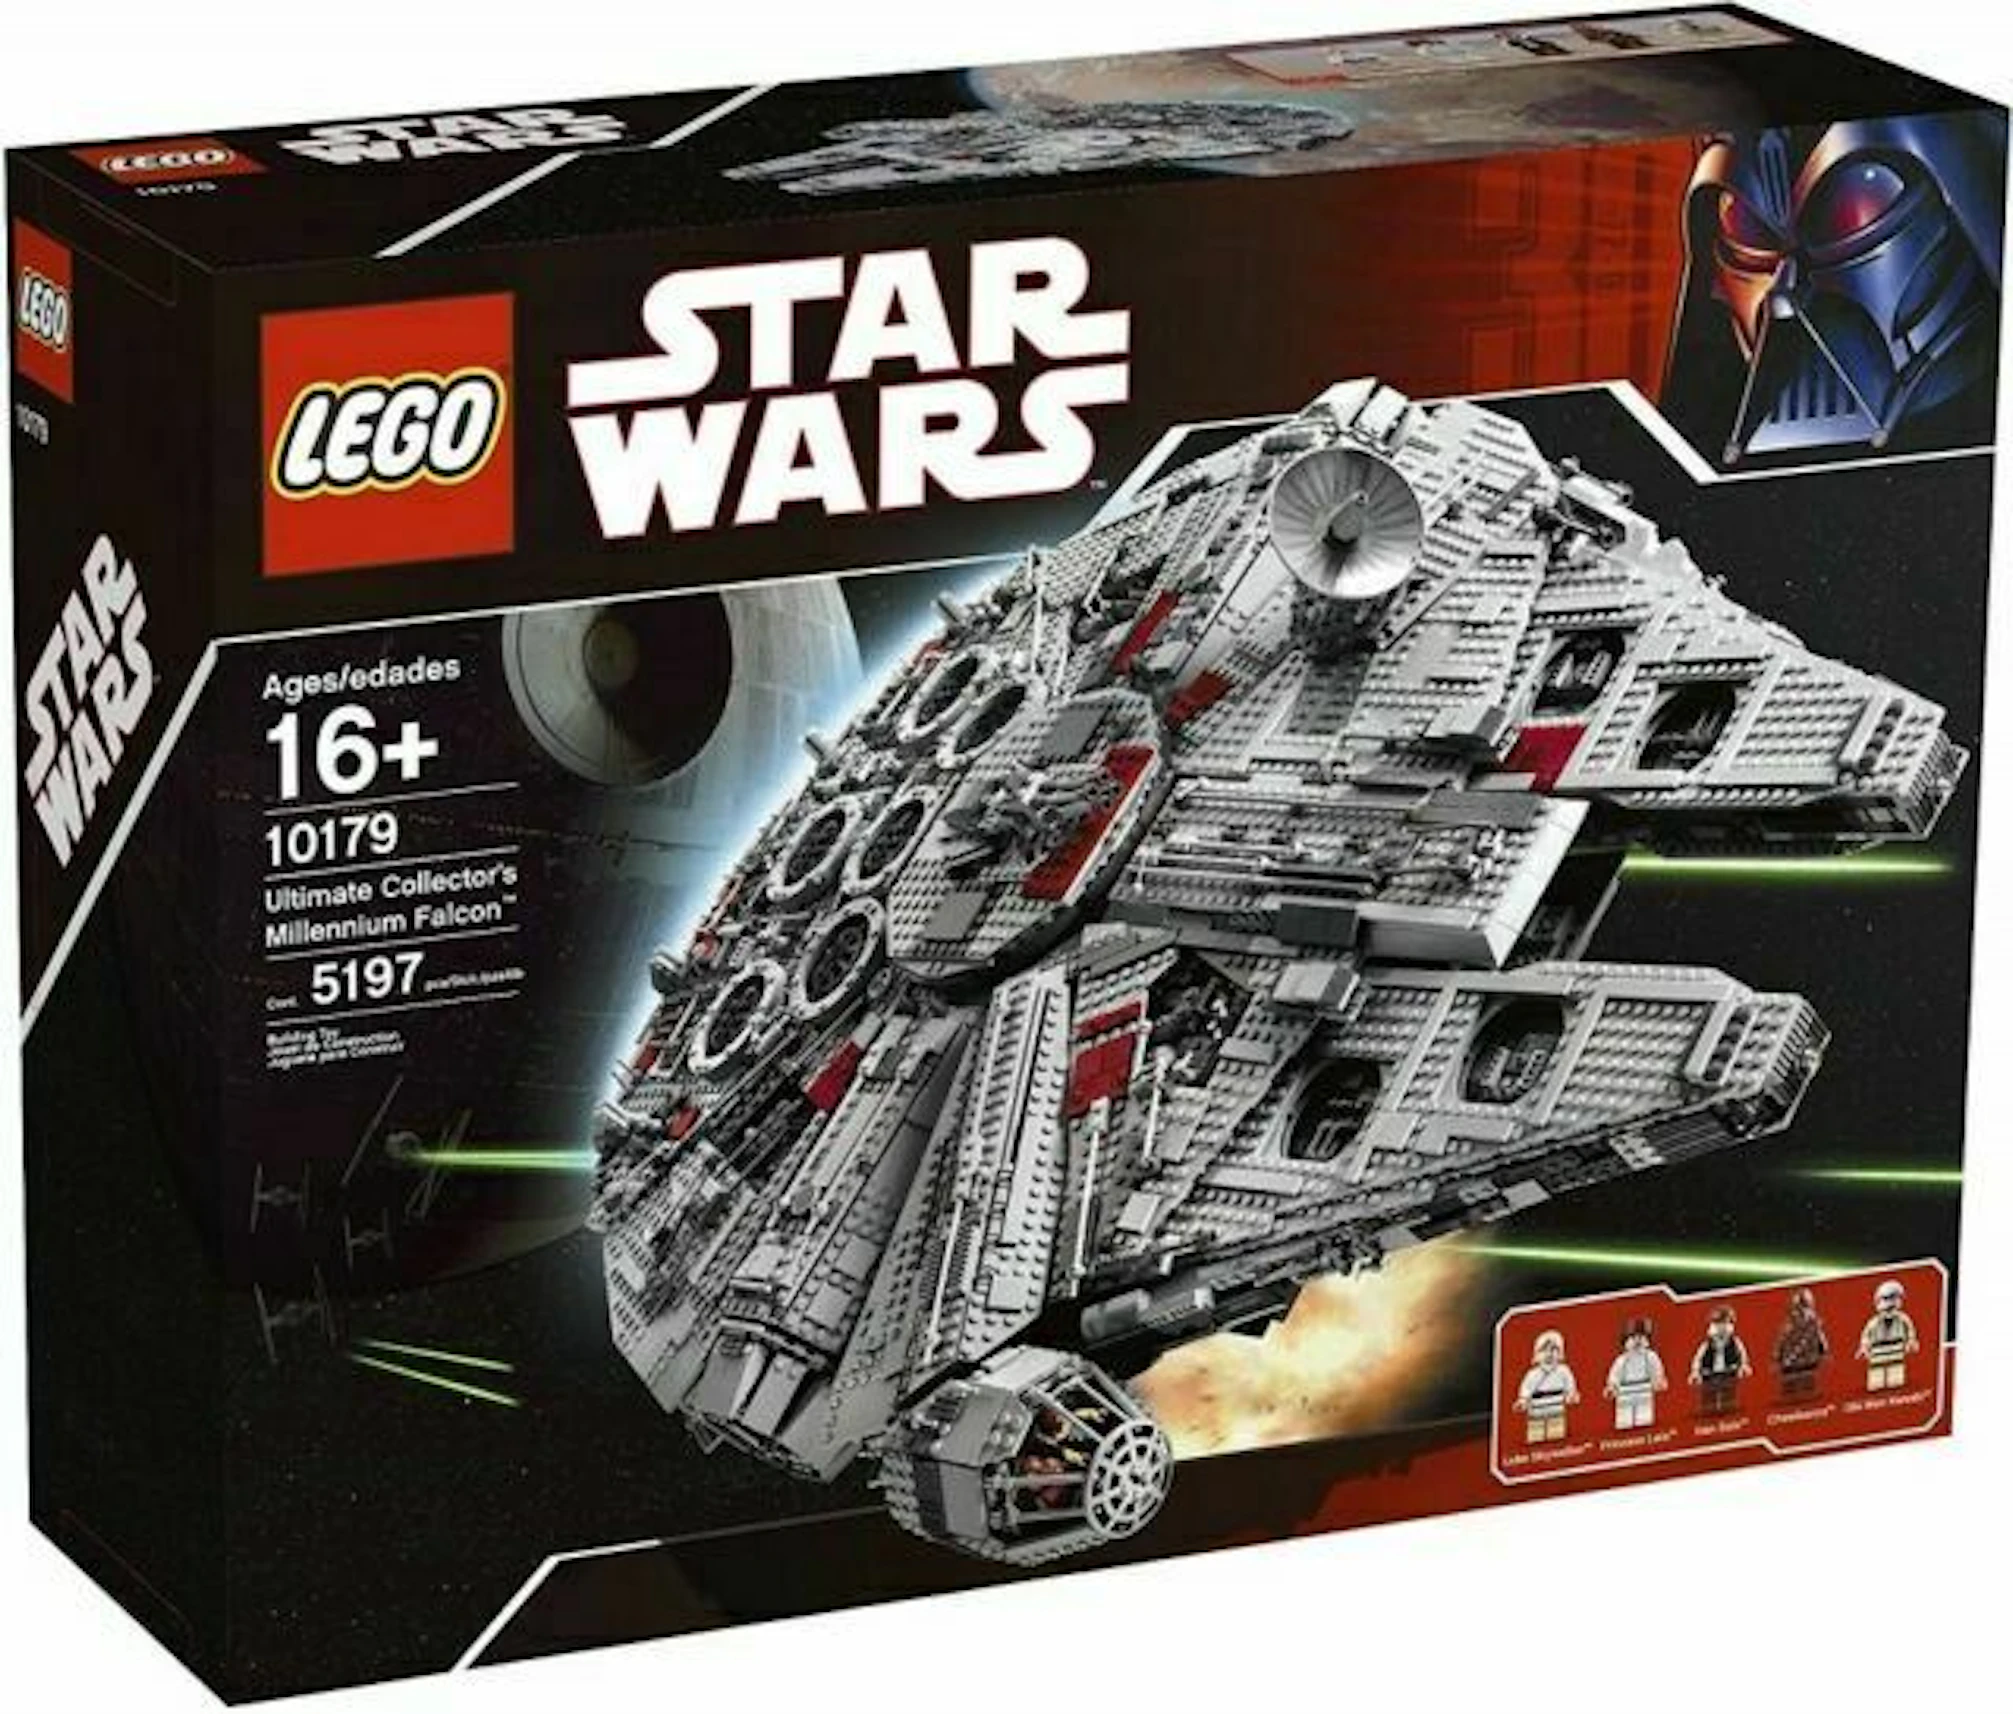 LEGO Star Wars Ultimate Collector's Millennium Falcon Set 10179 - US